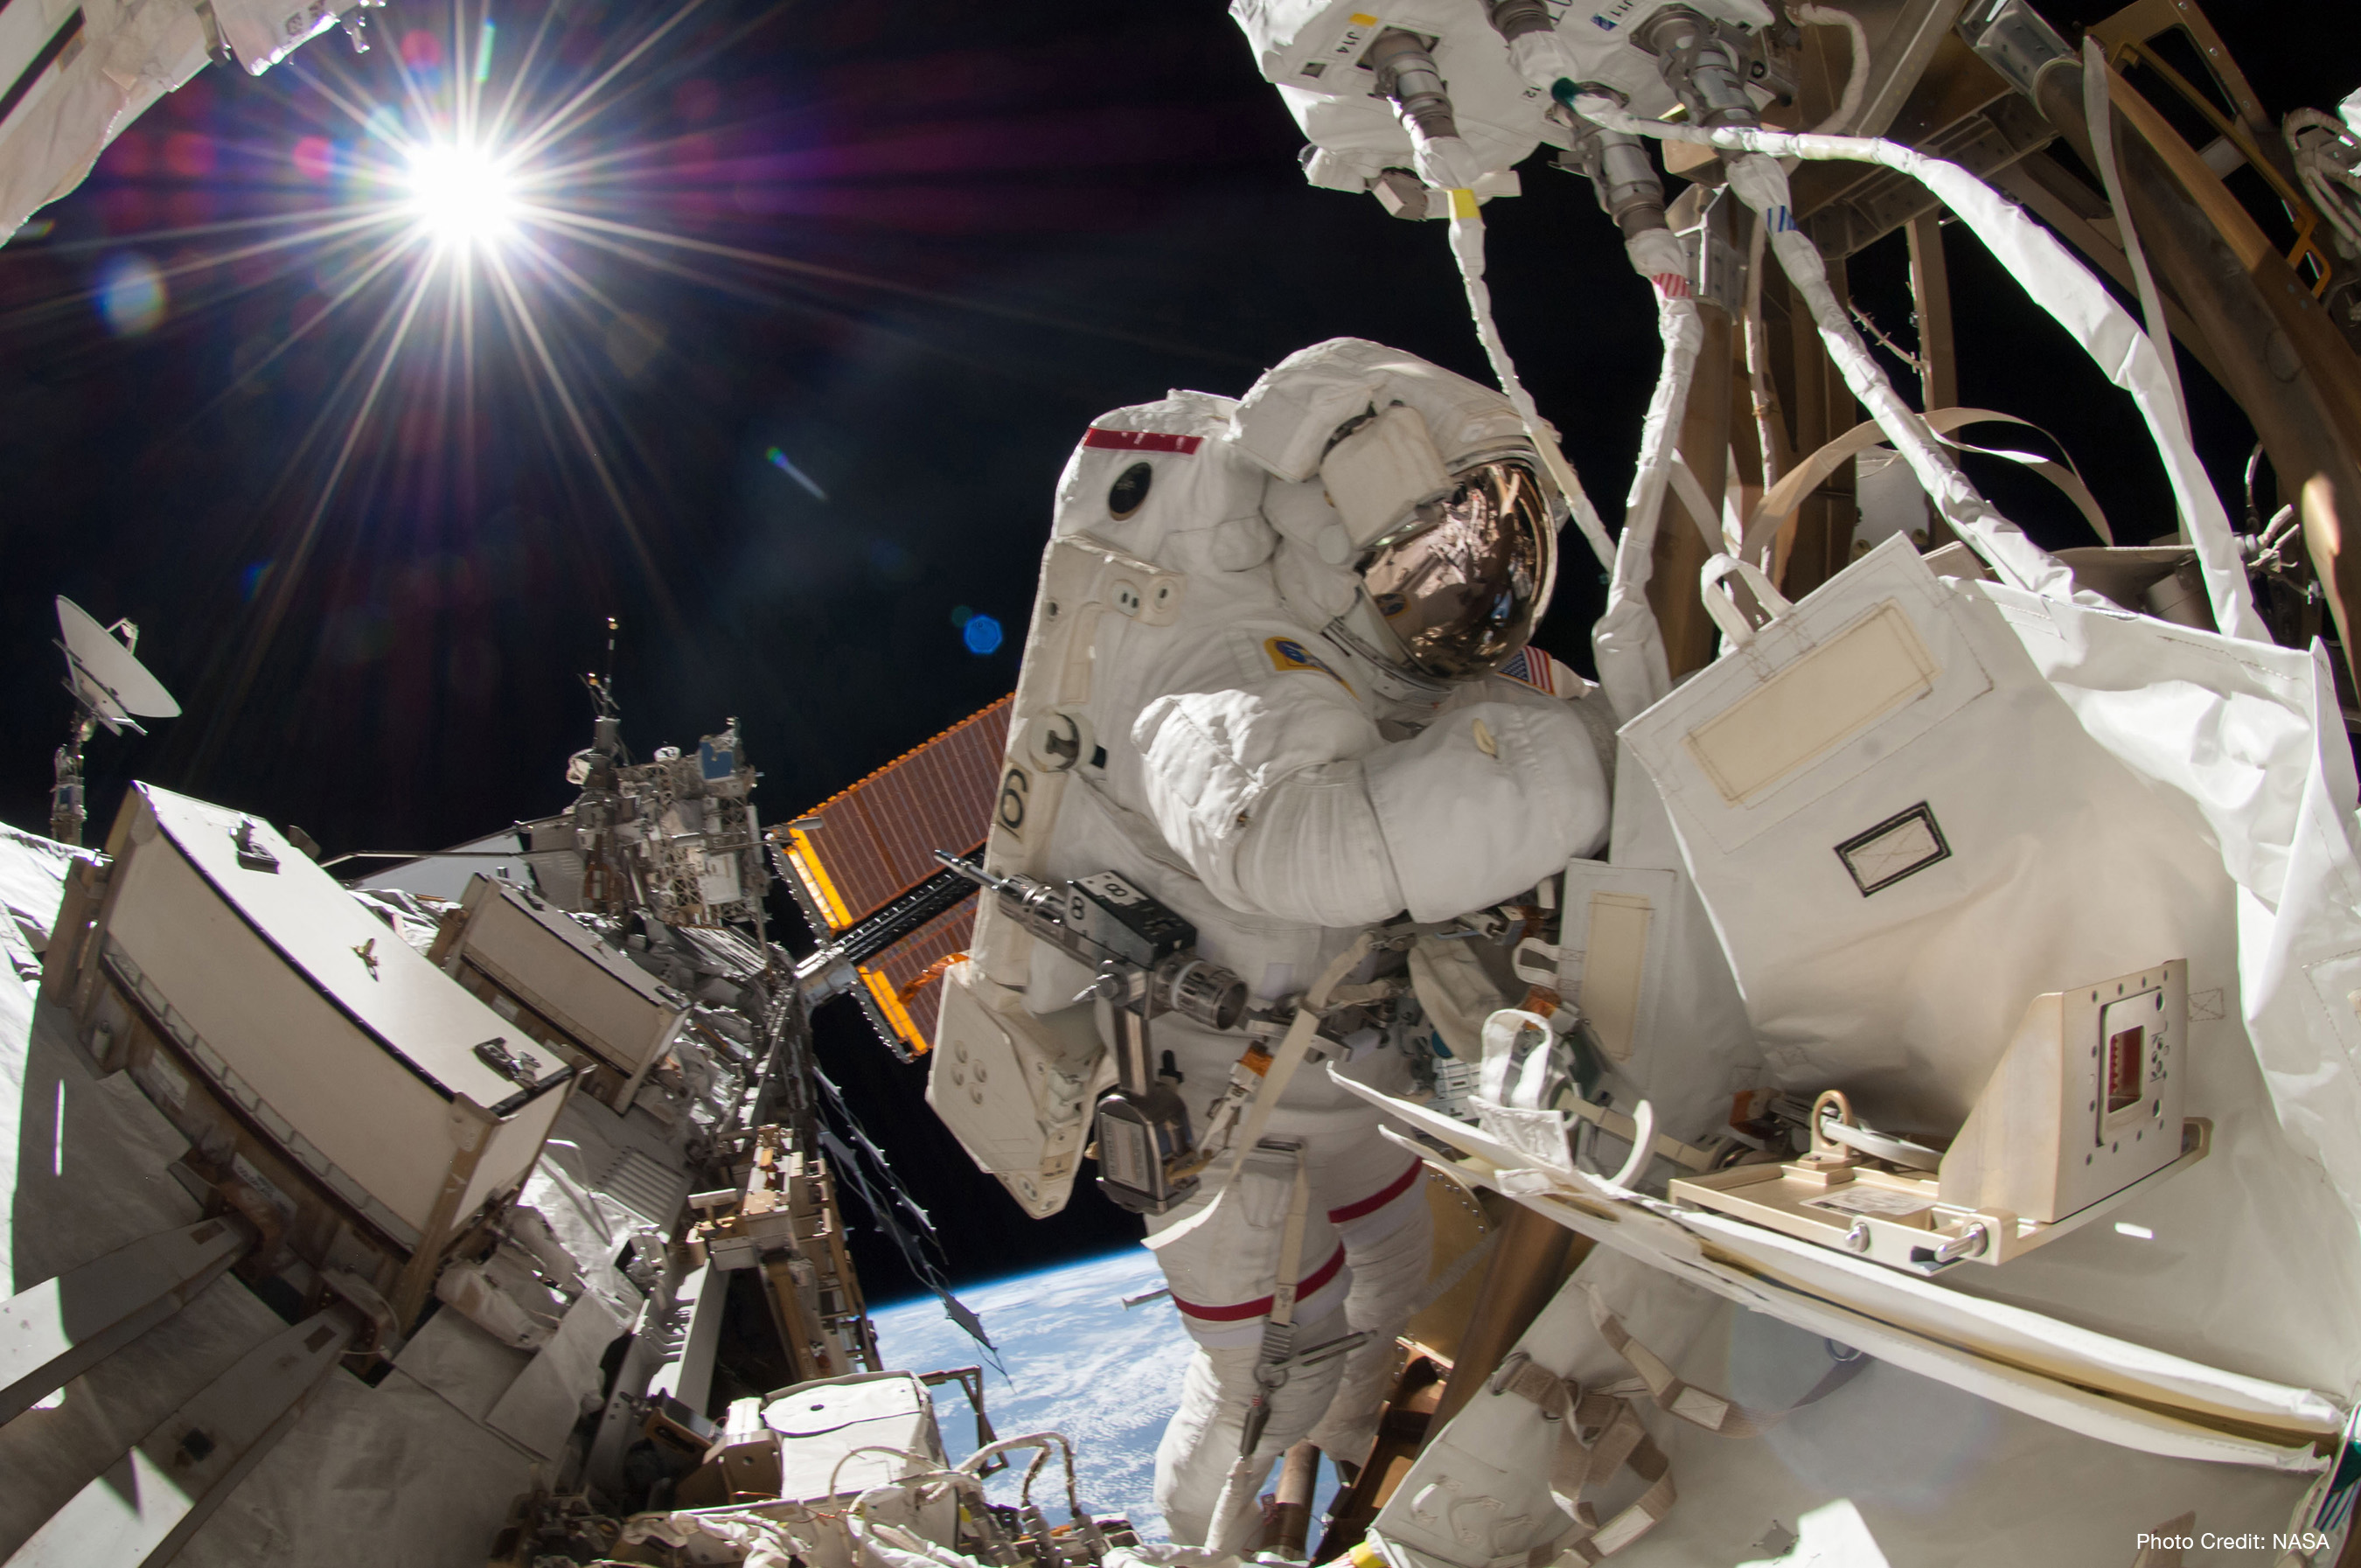 NASA astronaut Reid Wiseman, Expedition 41 flight engineer, participates in a spacewalk, performing maintenance on the International Space Station. Photo credit: NASA.